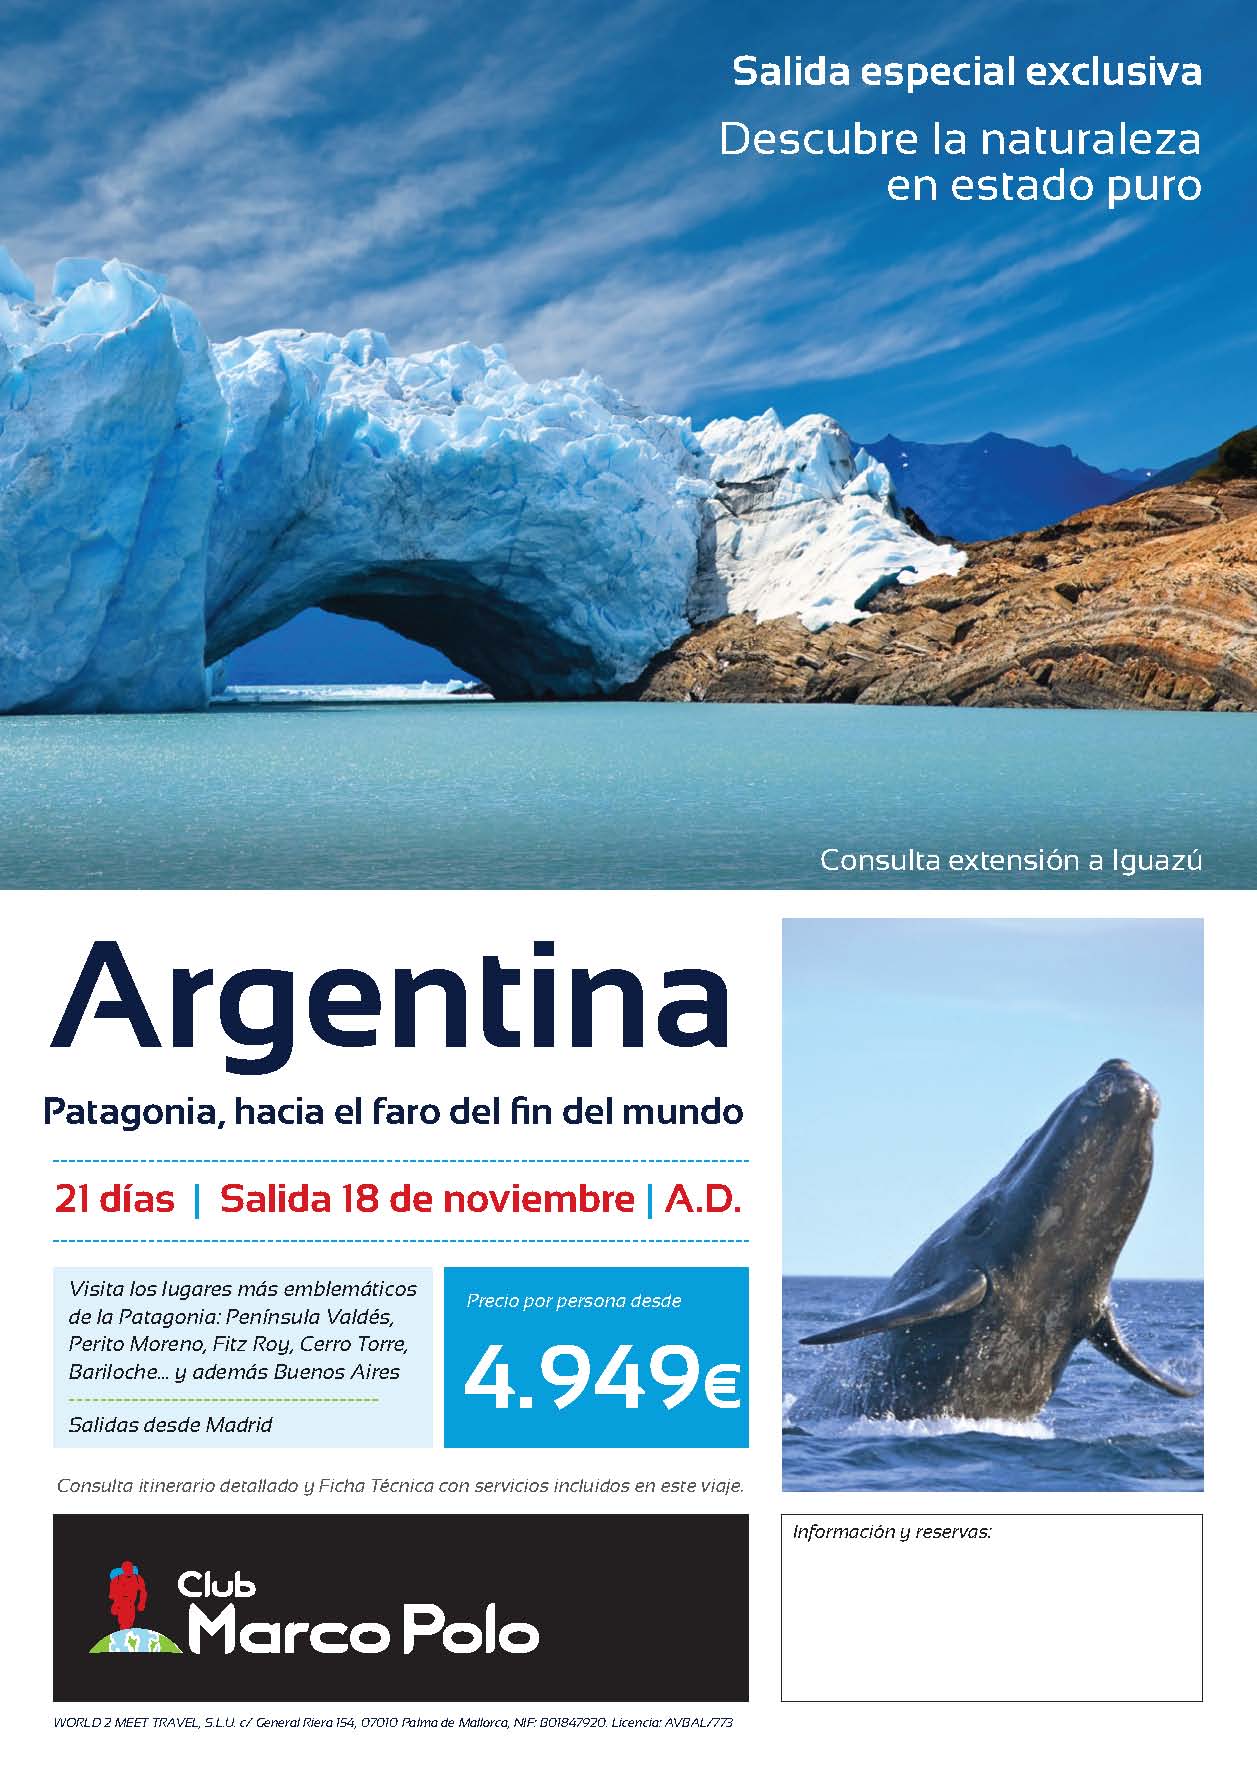 Oferta Club Marco Polo Argentina Patagonia 21 dias salida 18 de noviembre de 2022 desde Madrid